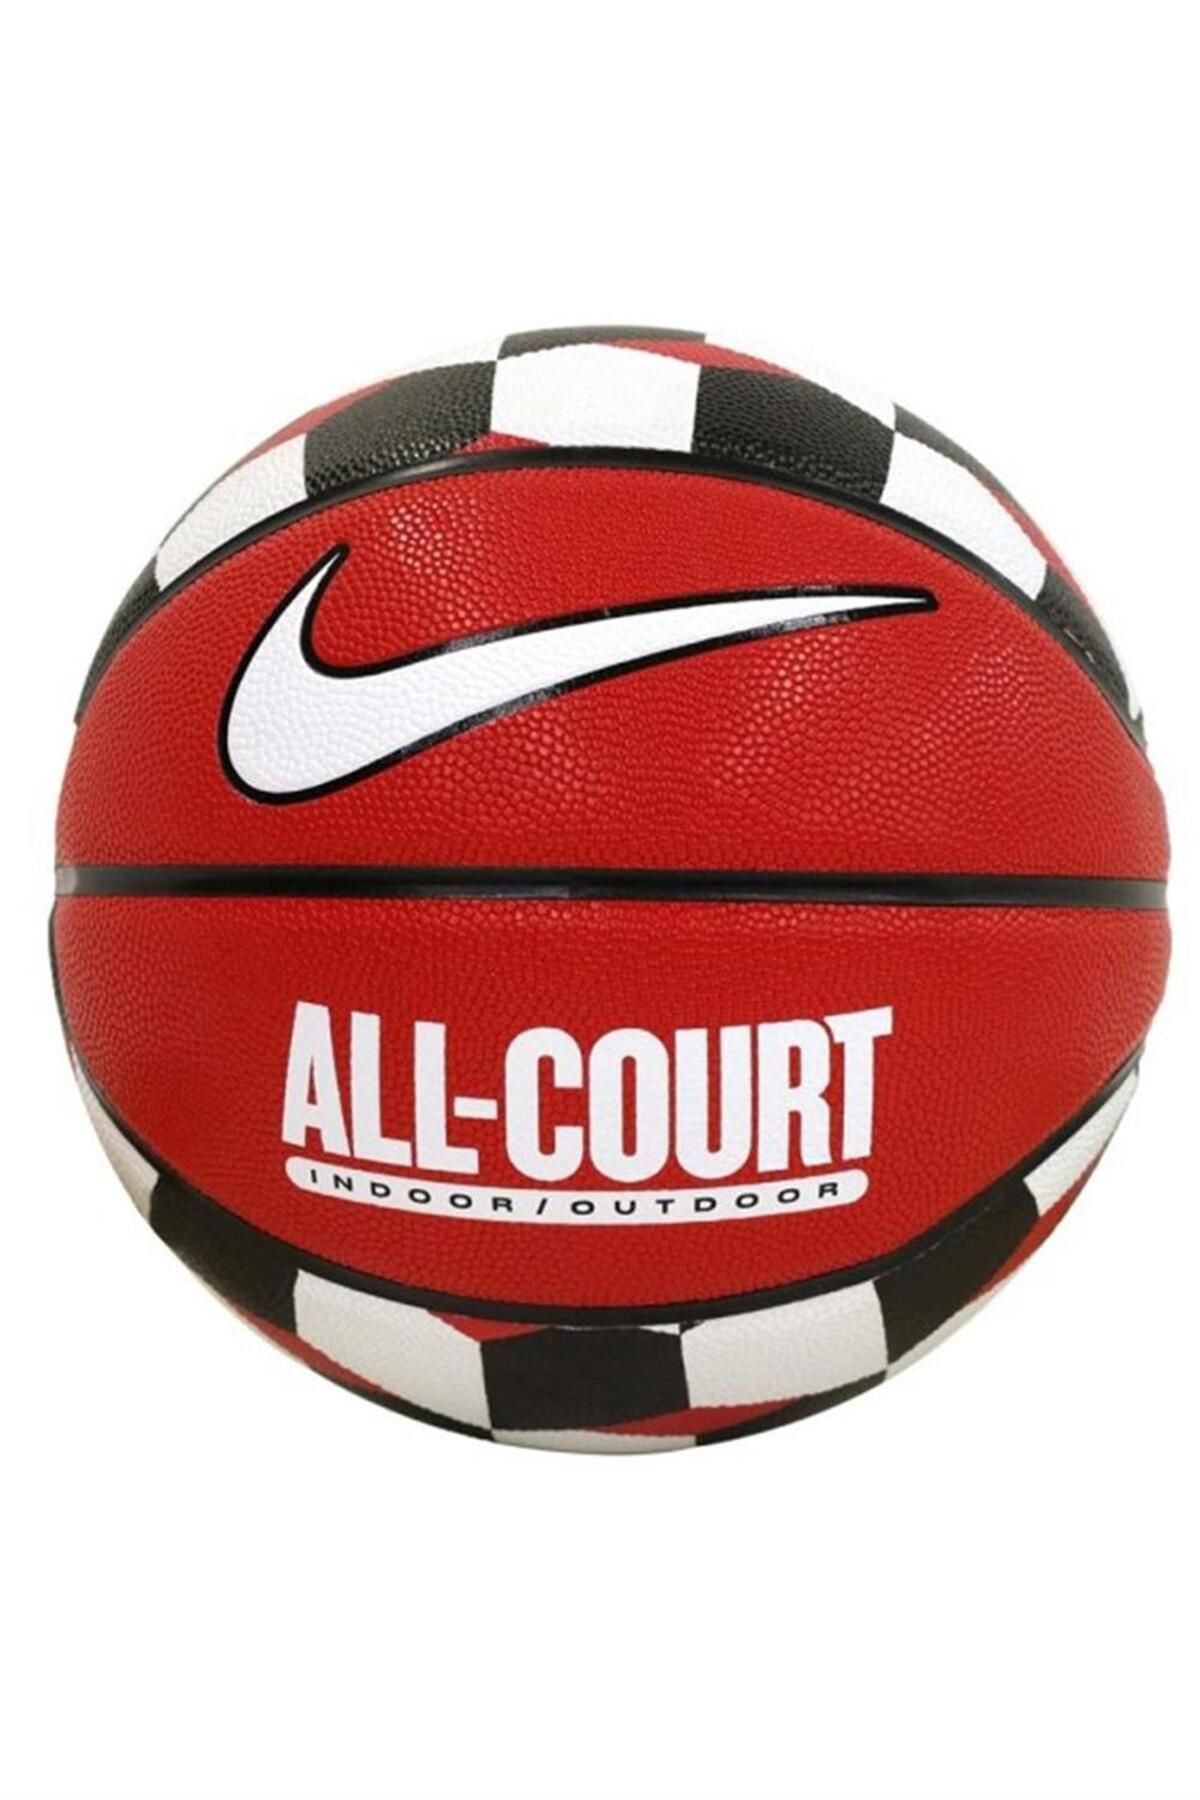 Nike Everyday All Court 8p Graphic Deflated Basketbol Topu N.100.4370.621.07